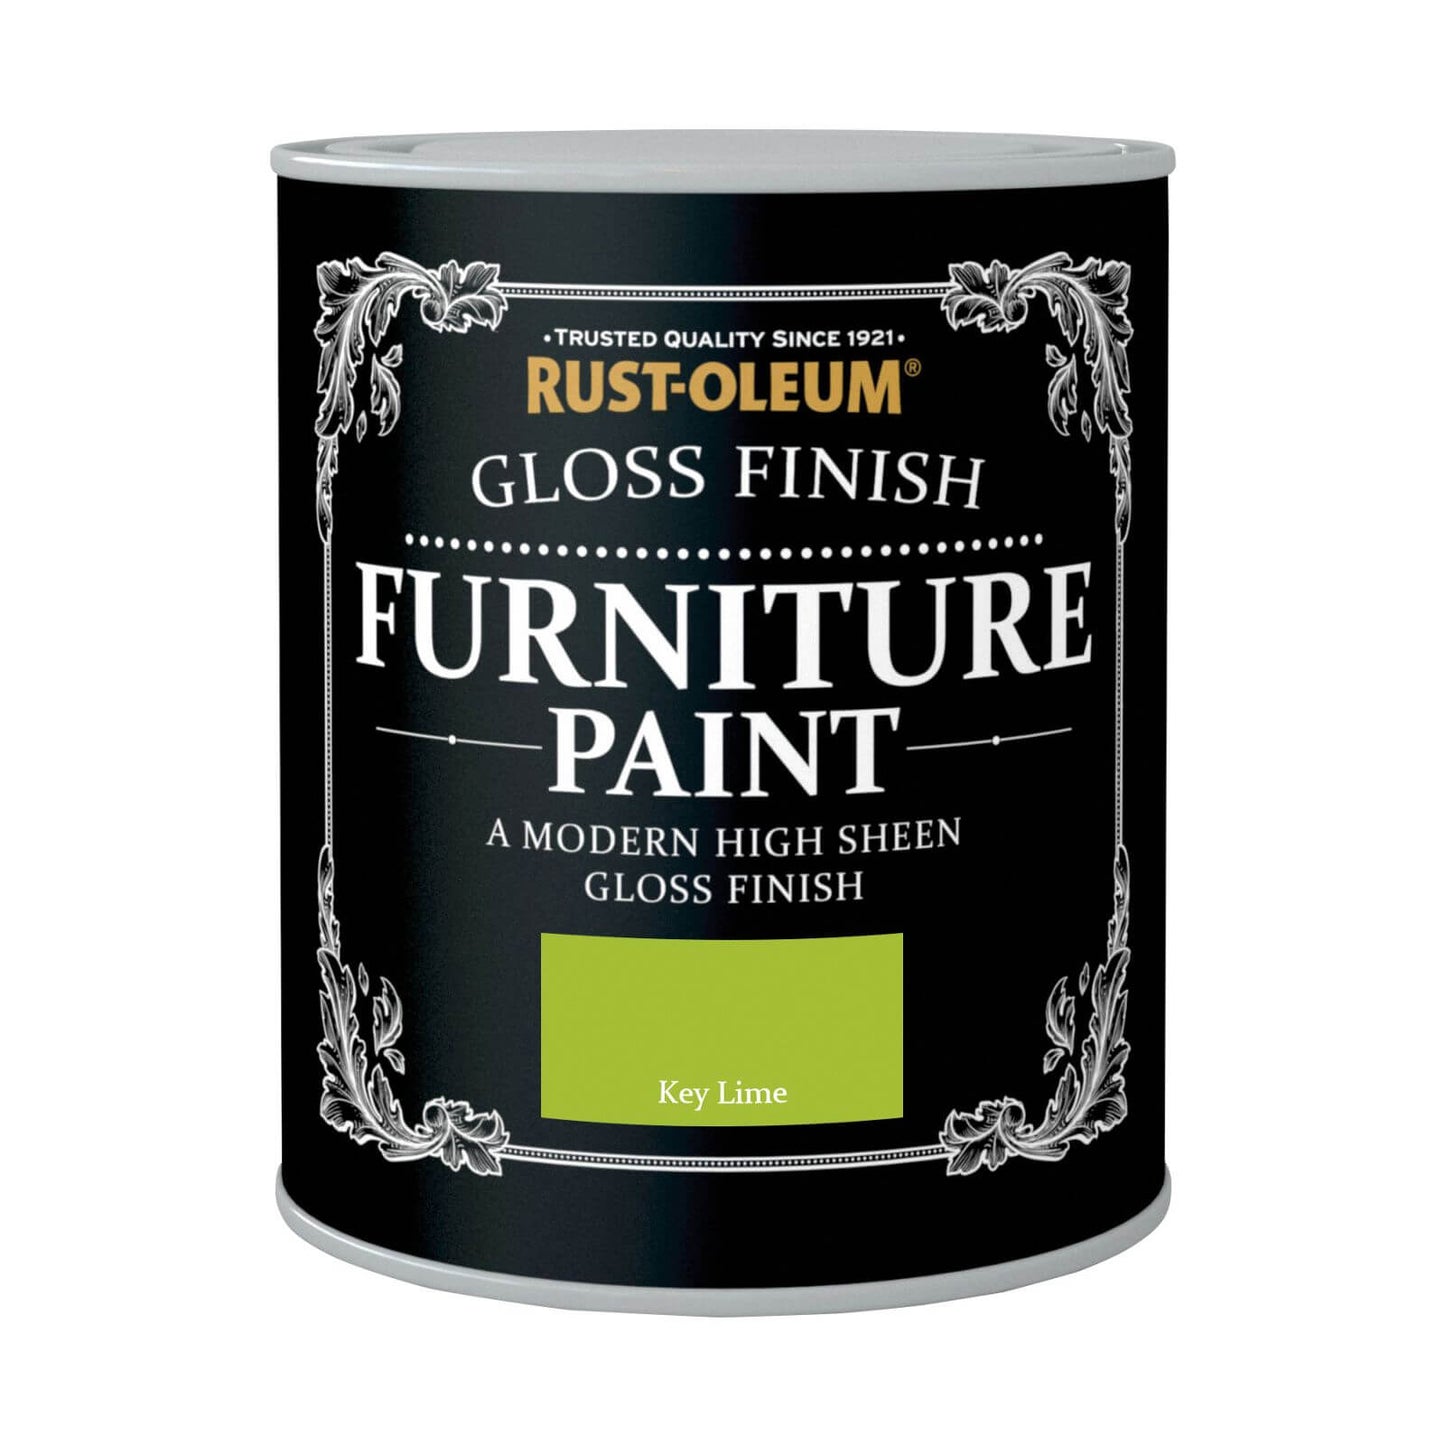 Rust-Oleum Gloss Finish Furniture Paint Key Lime